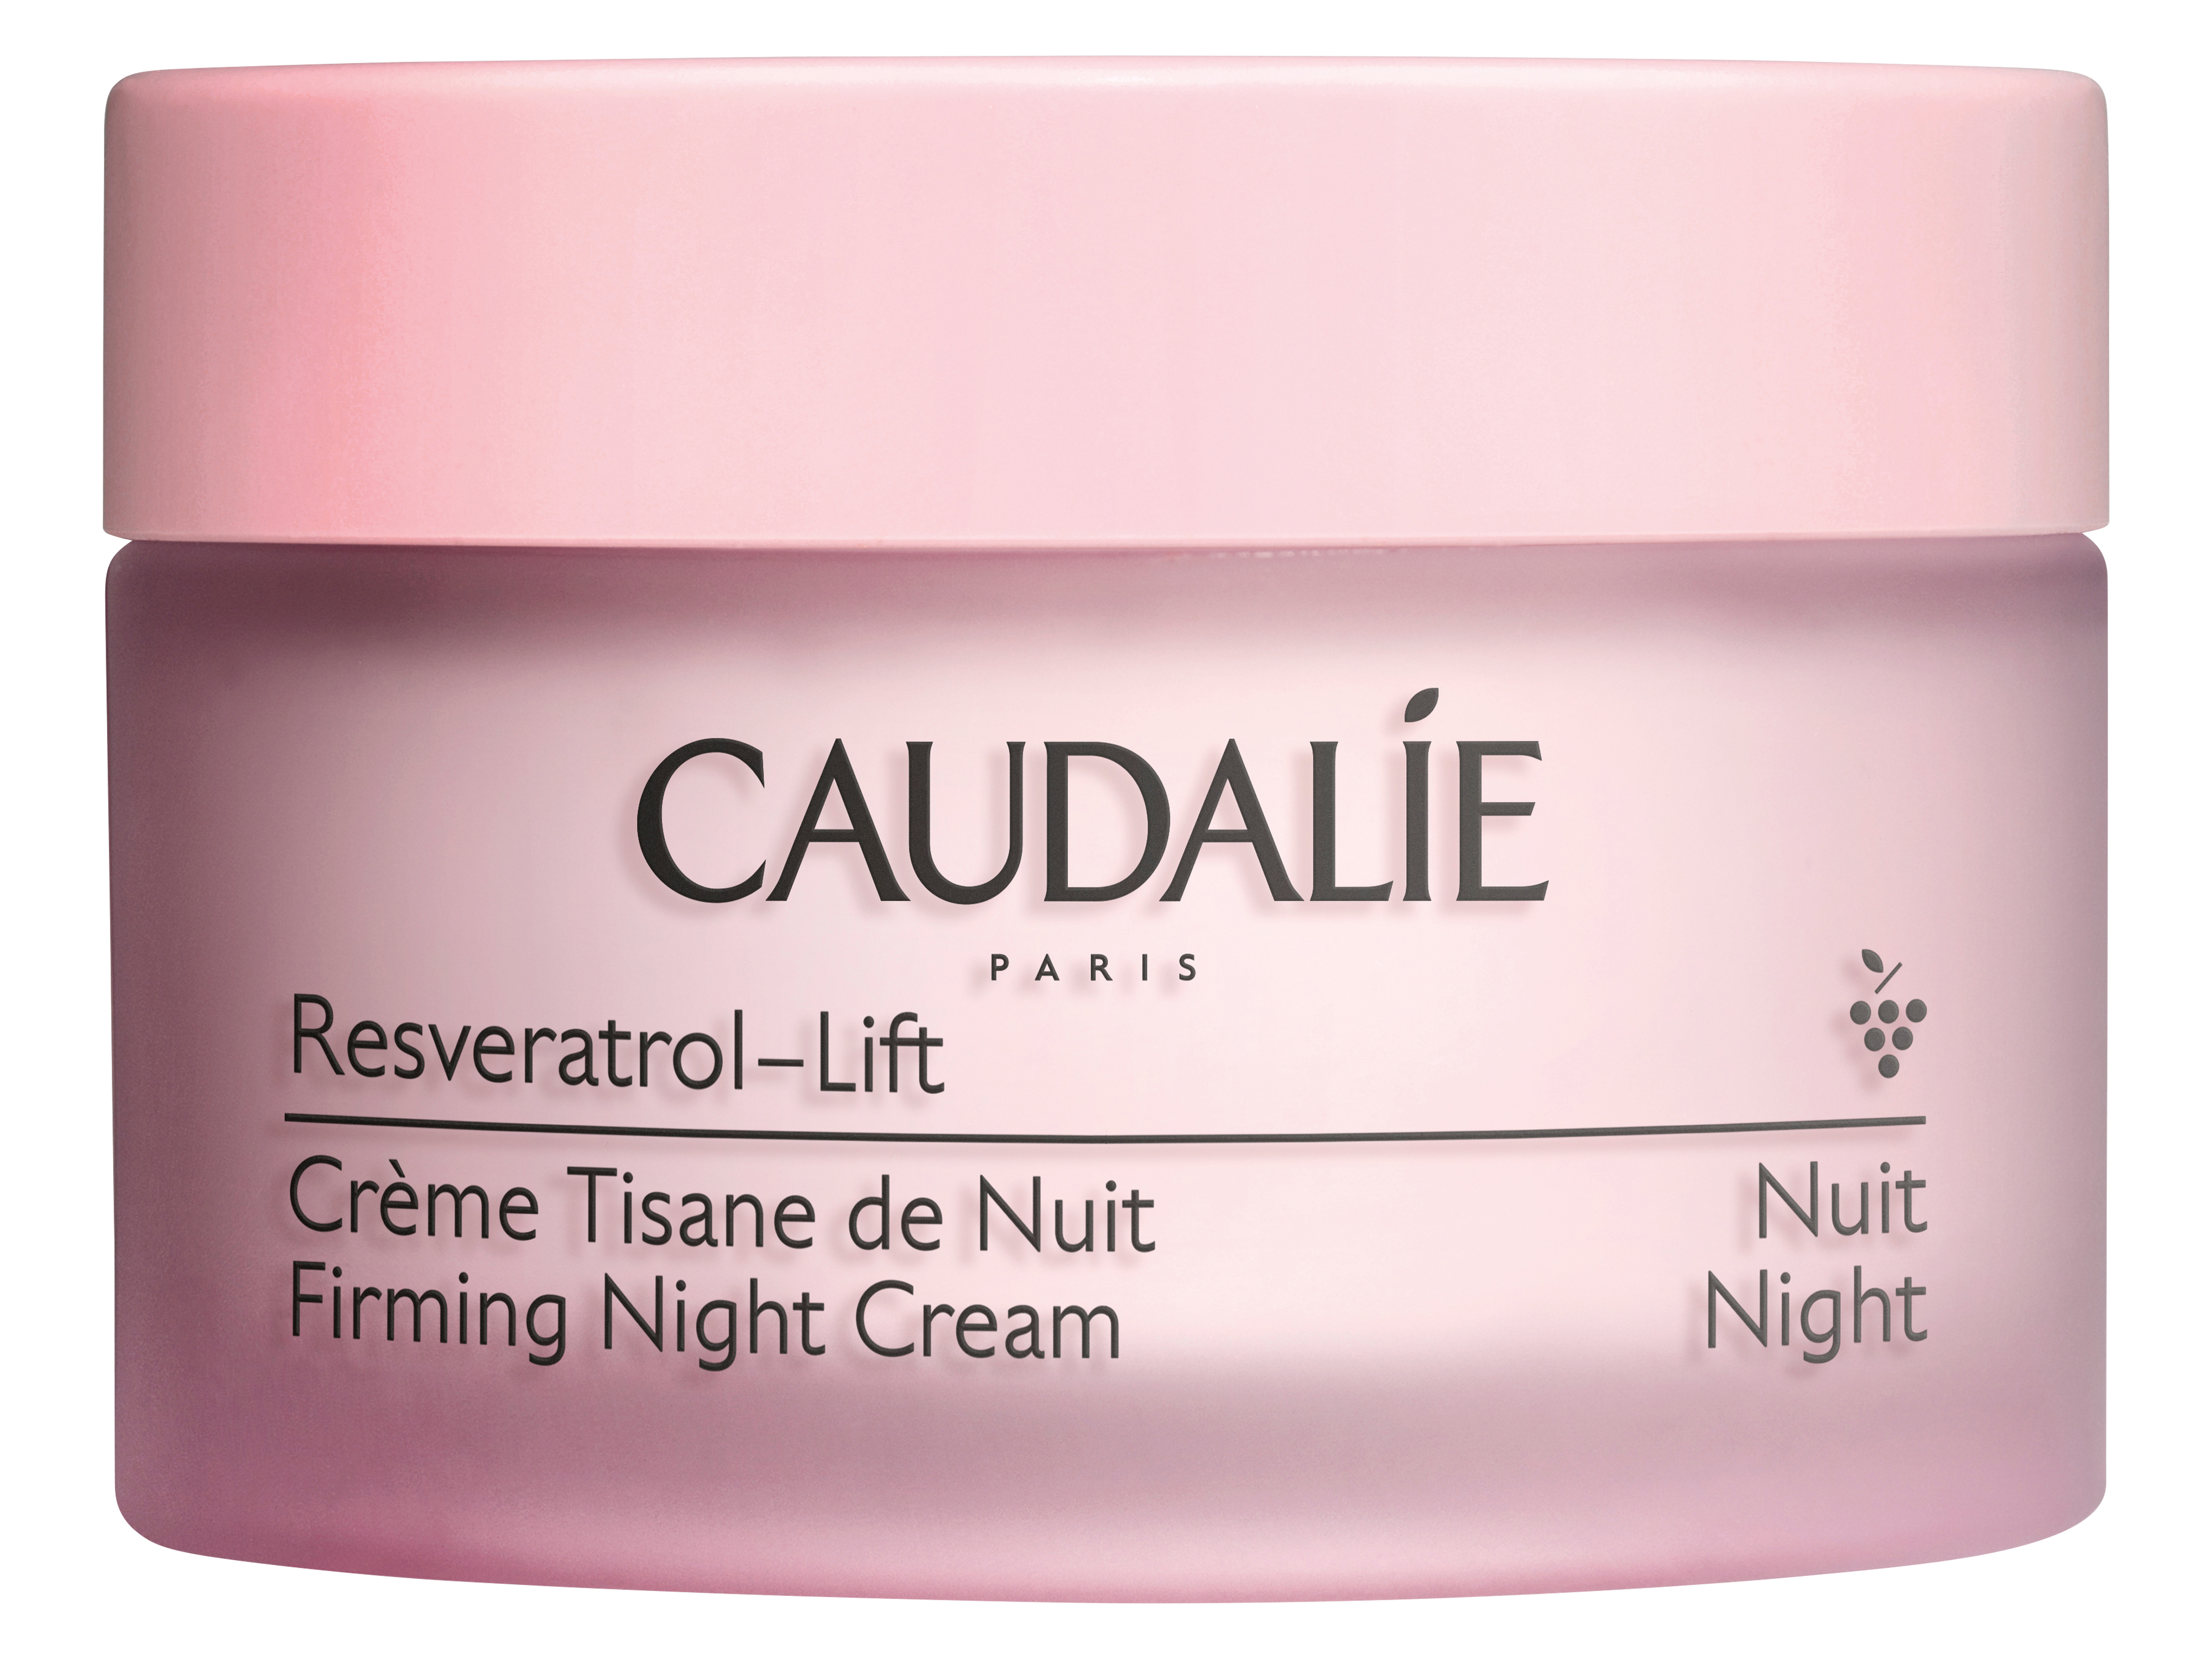 Caudalie Resveratrol-Lift Firming Night Cream, 50 ml